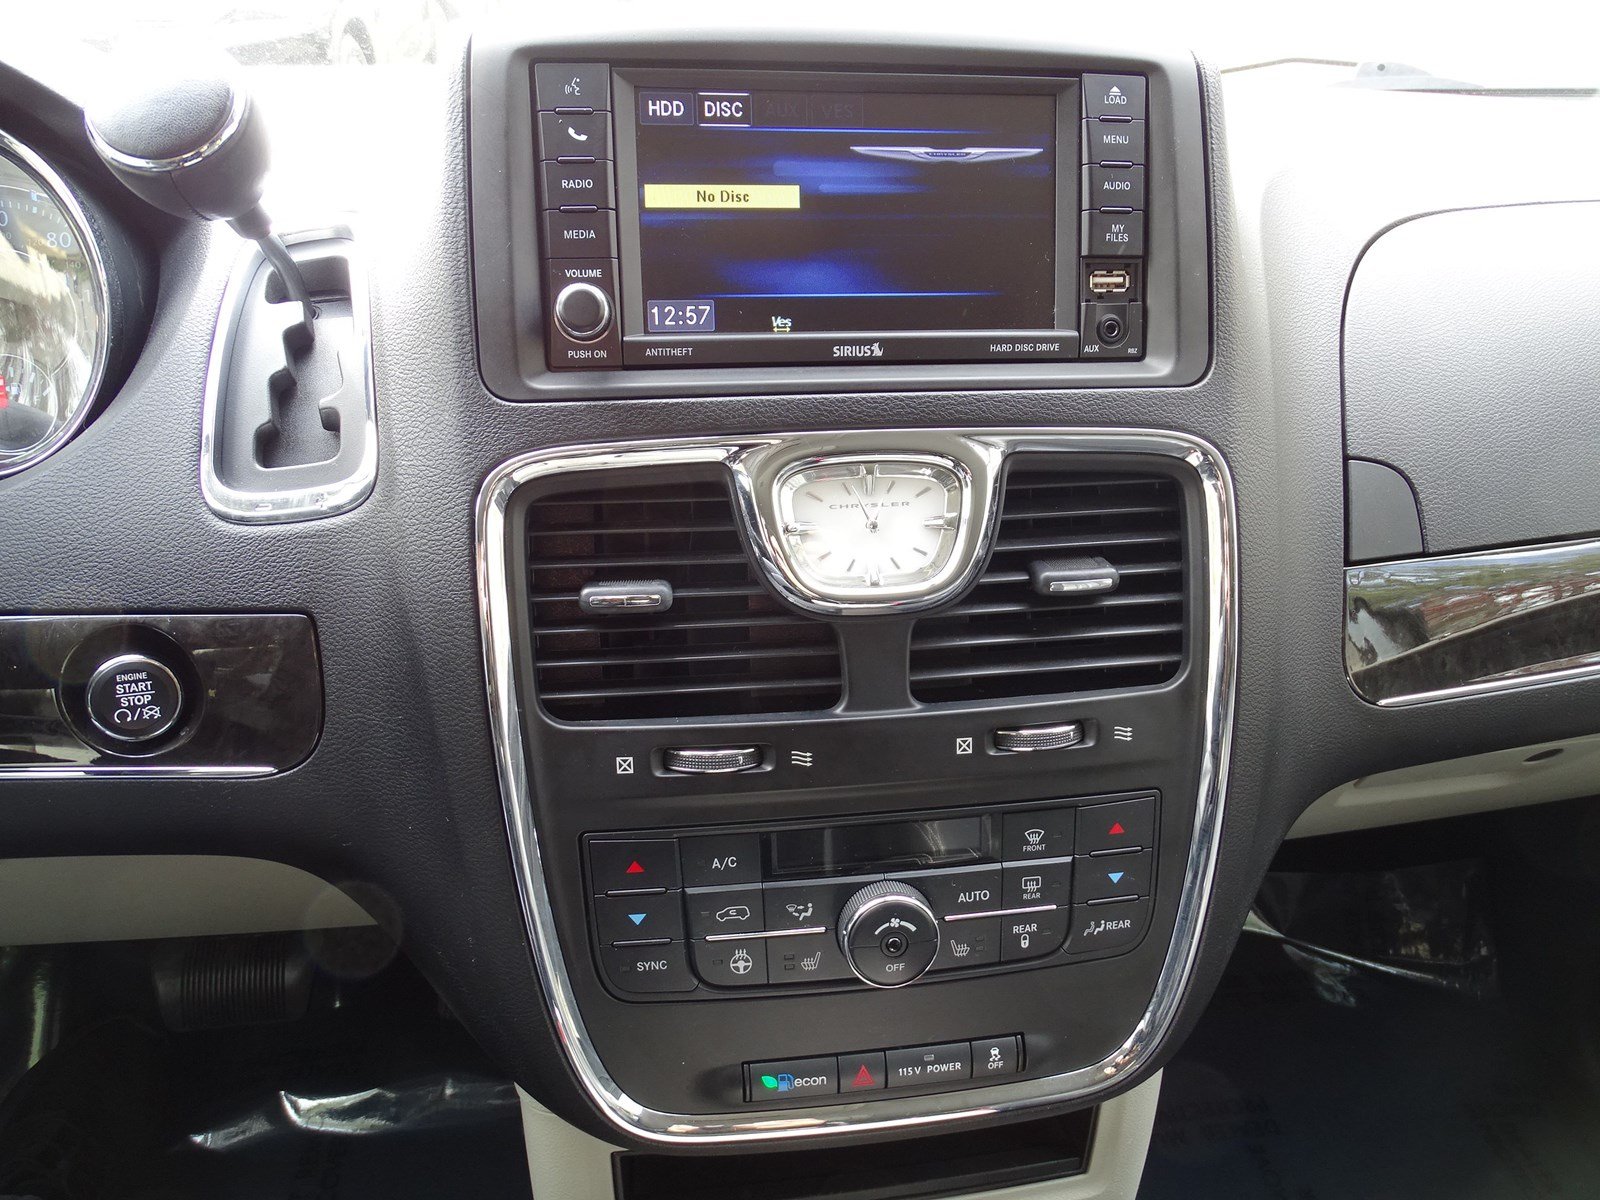 PreOwned 2013 Chrysler Town & Country TouringL Minivan